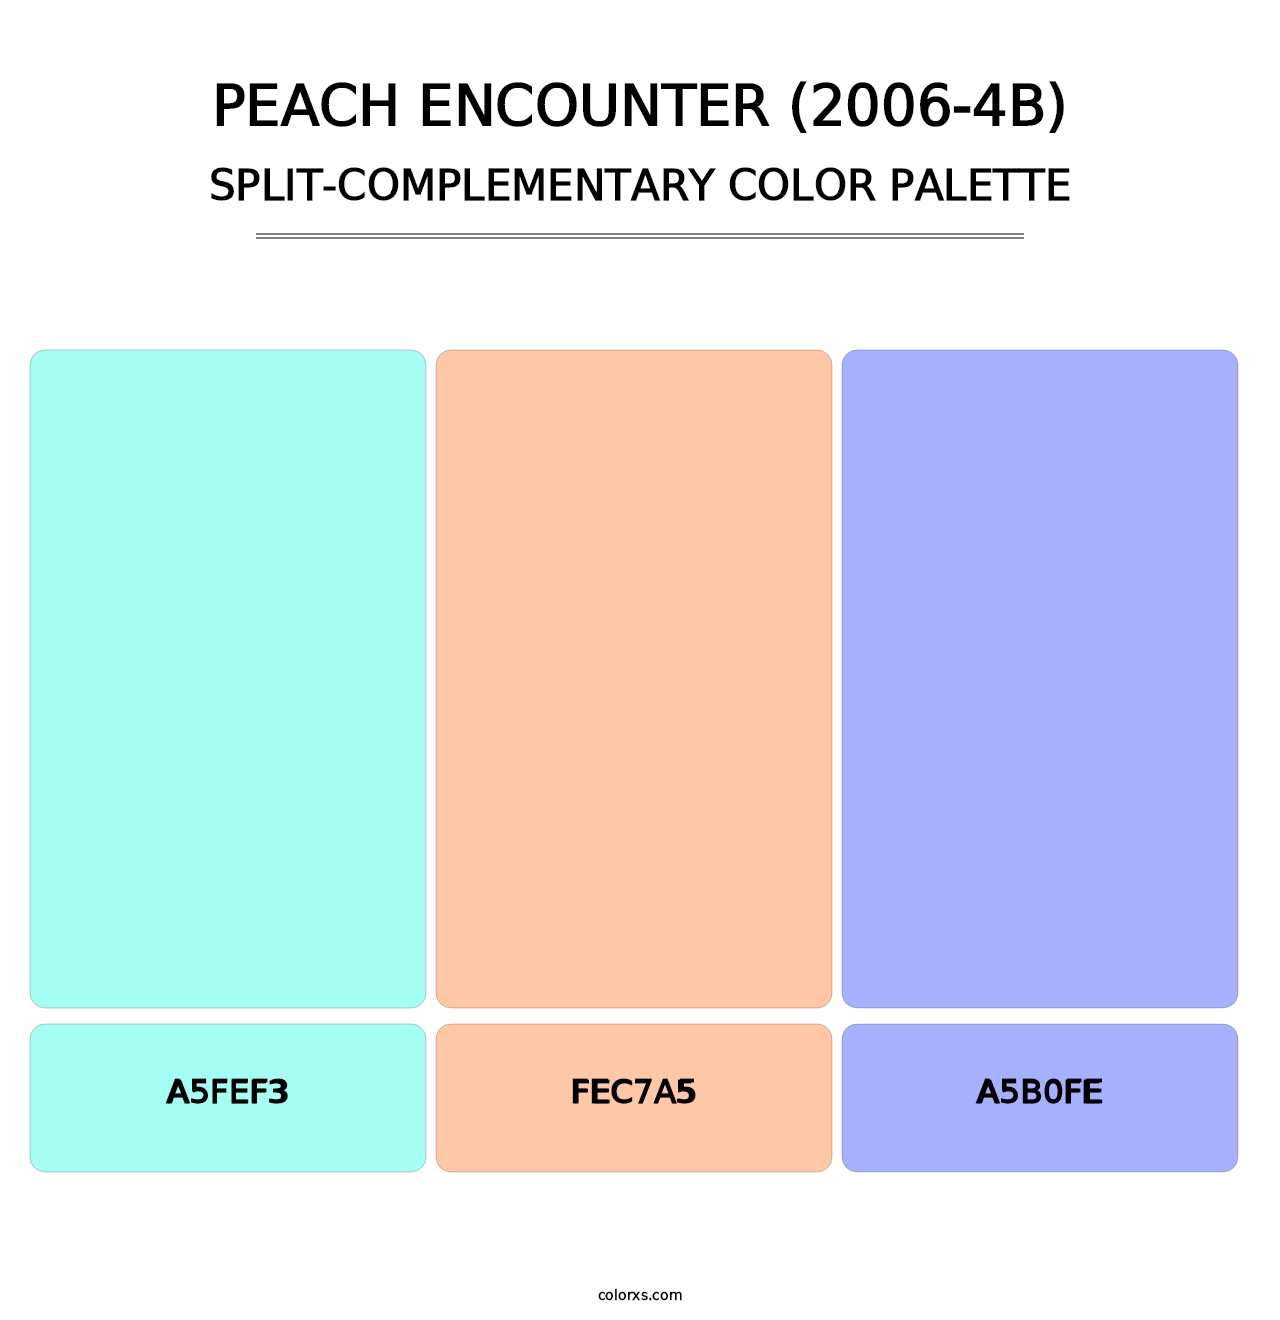 Peach Encounter (2006-4B) - Split-Complementary Color Palette